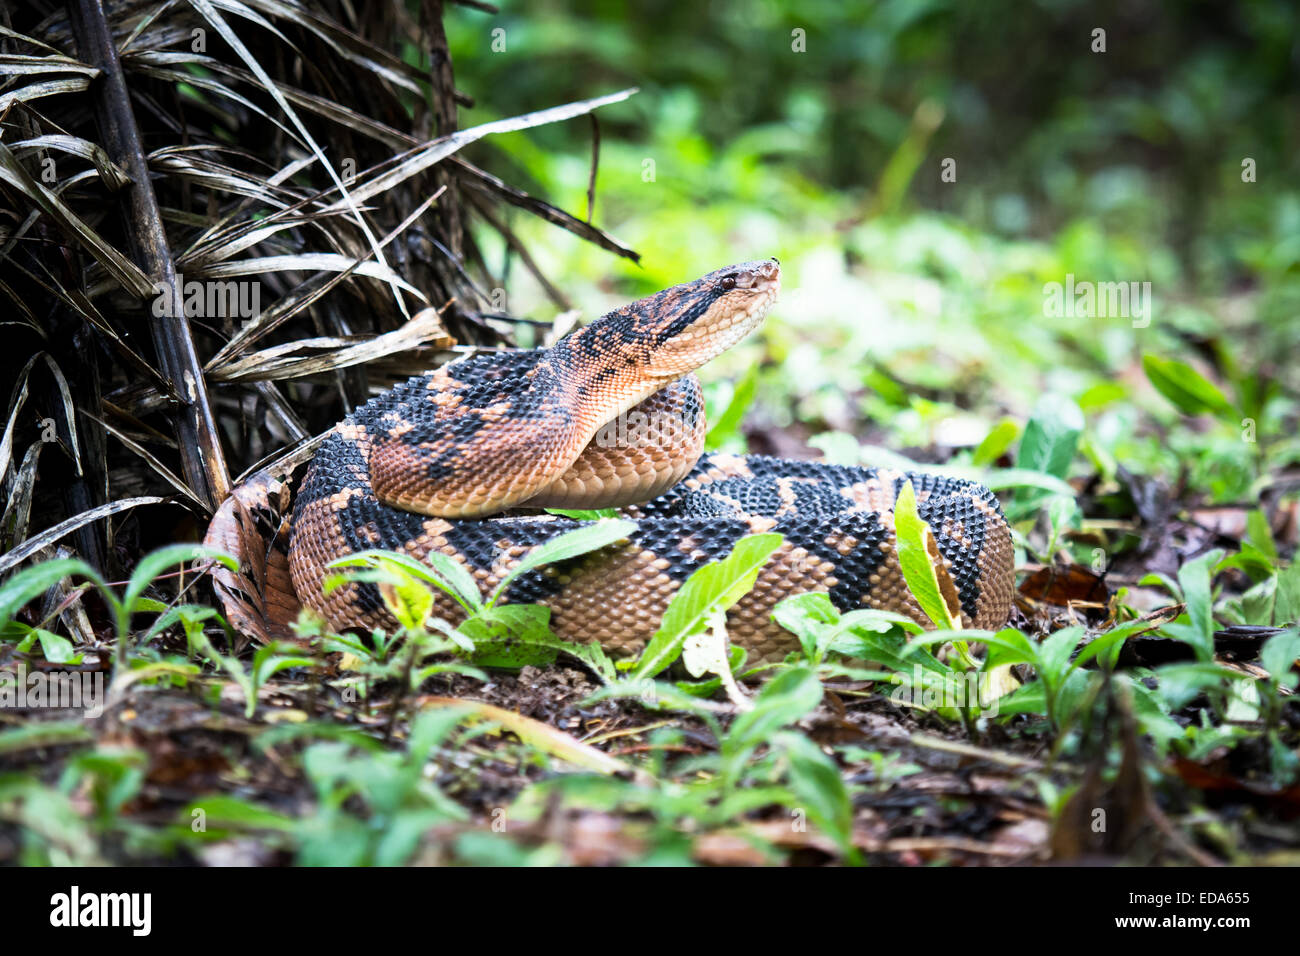 Shushupe - Amazon Bushmaster snake - lachesis muta Stock Photo